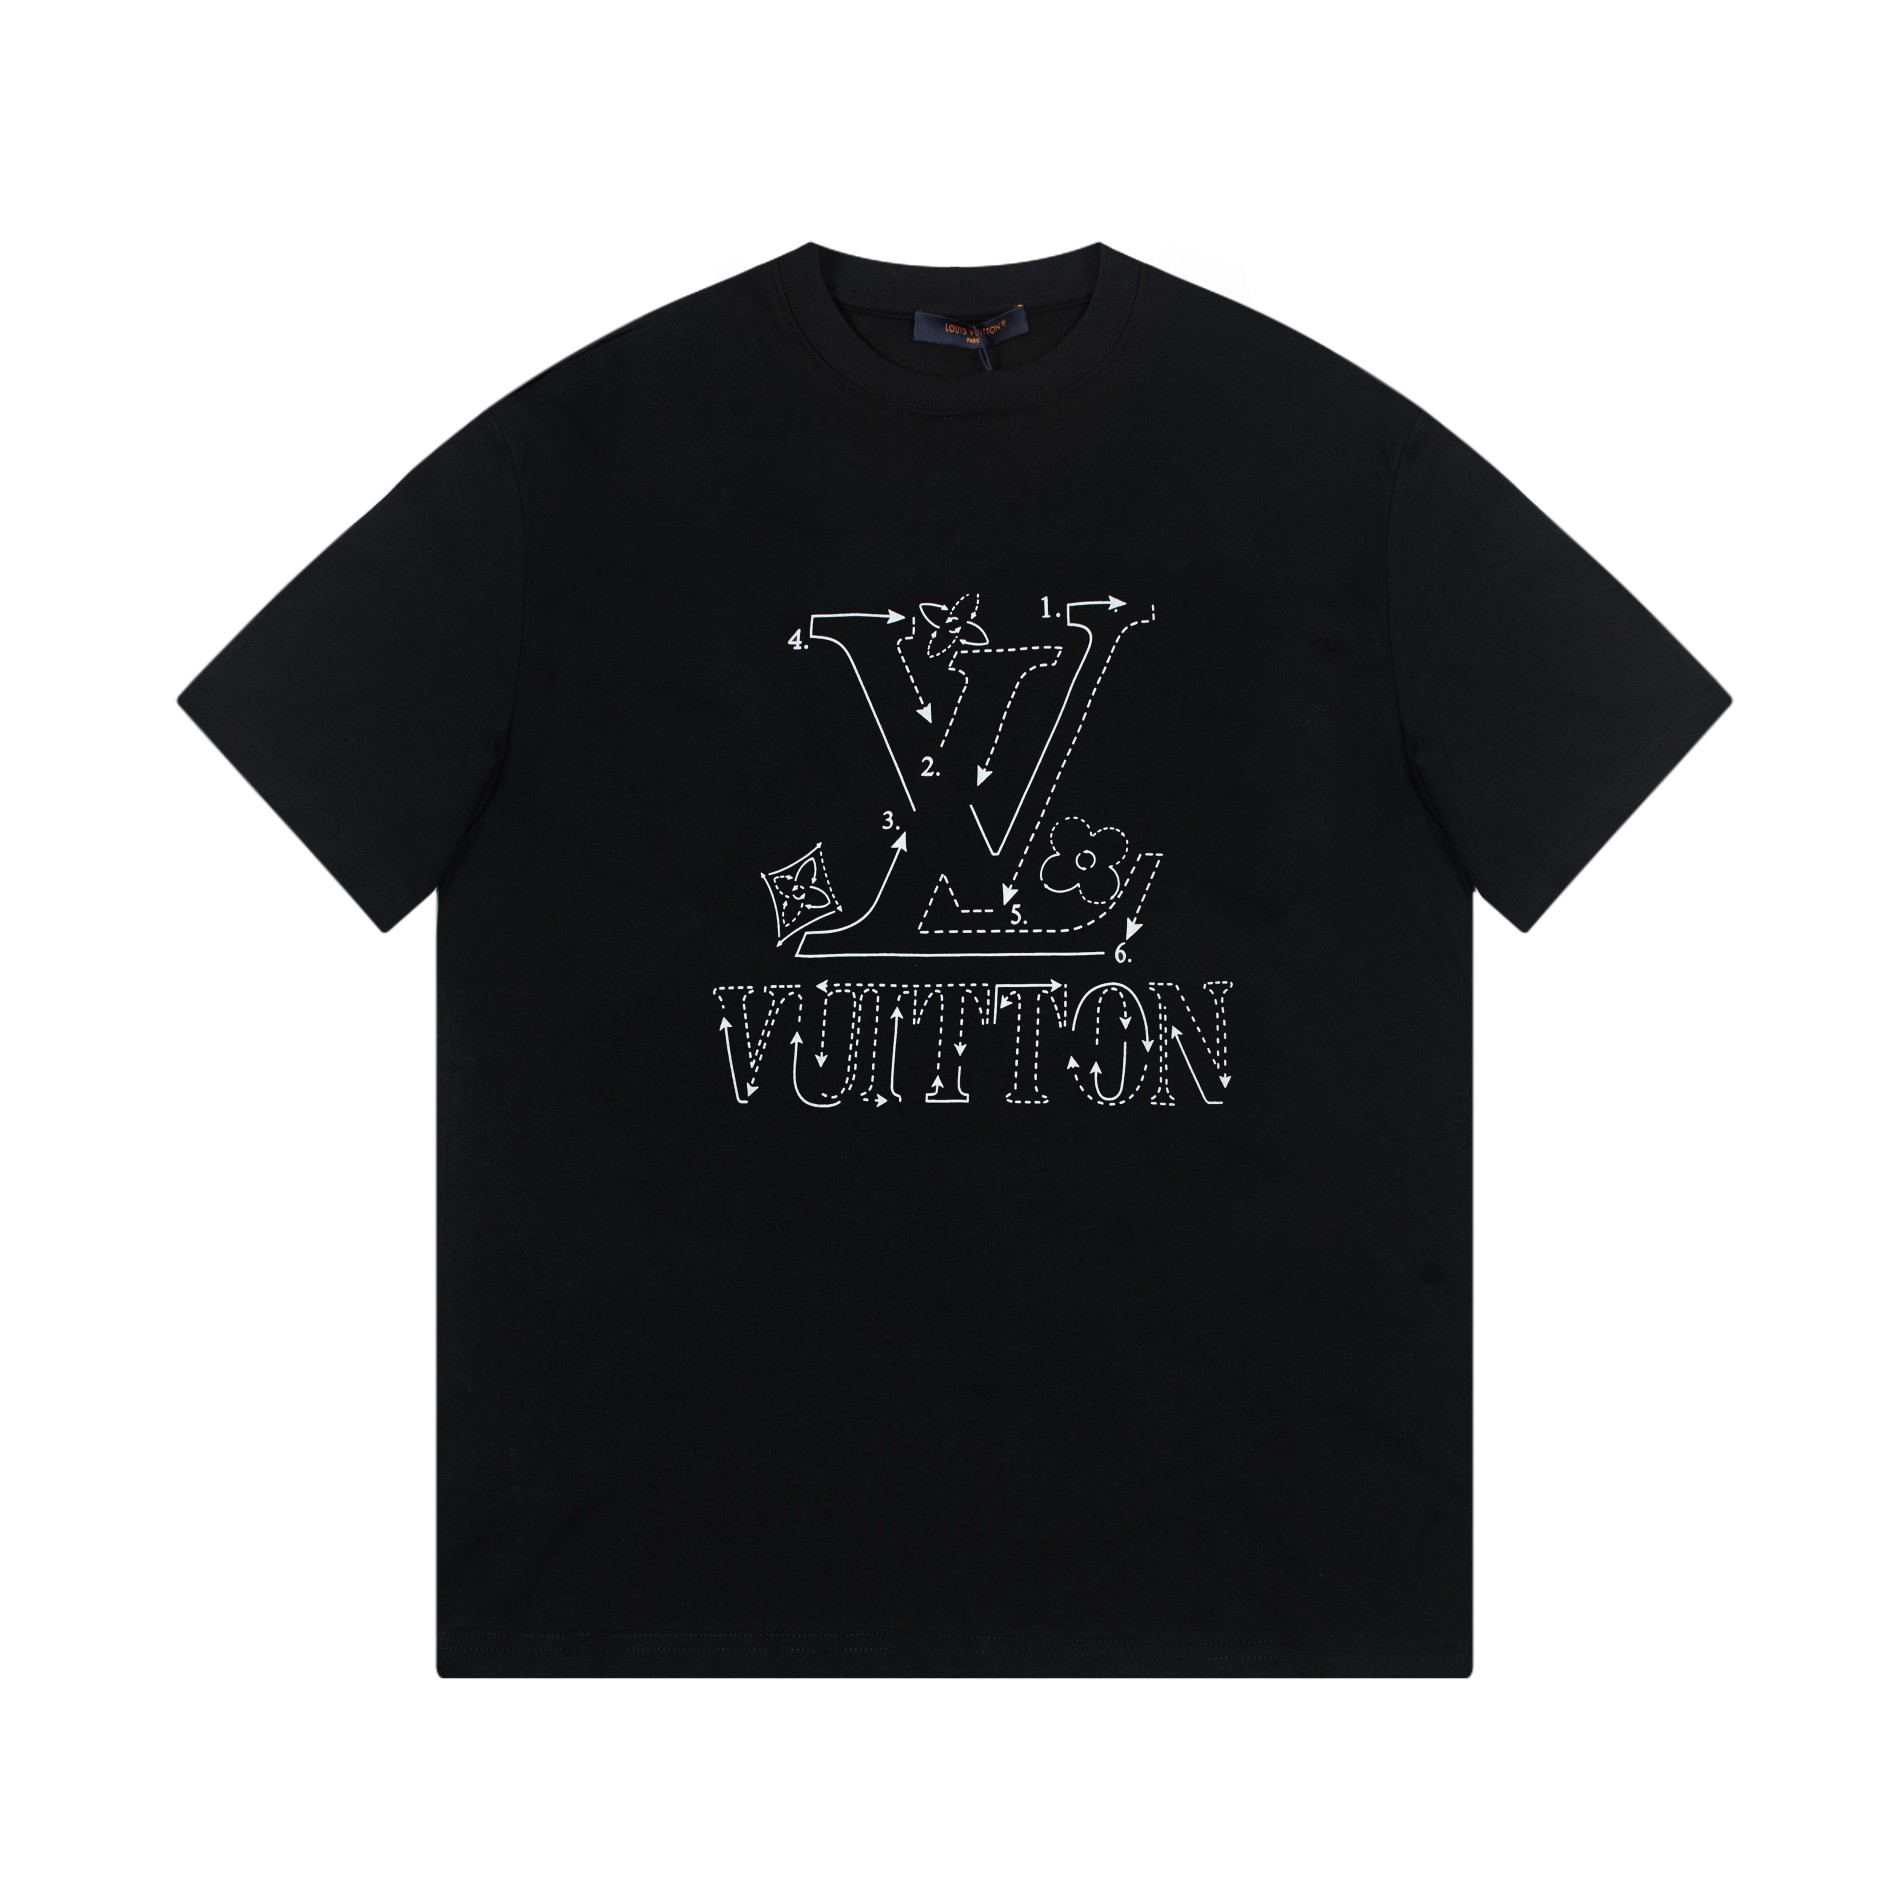 Louis Vuitton 1:1
 Clothing T-Shirt Replcia Cheap
 Black White Unisex Cotton Fashion